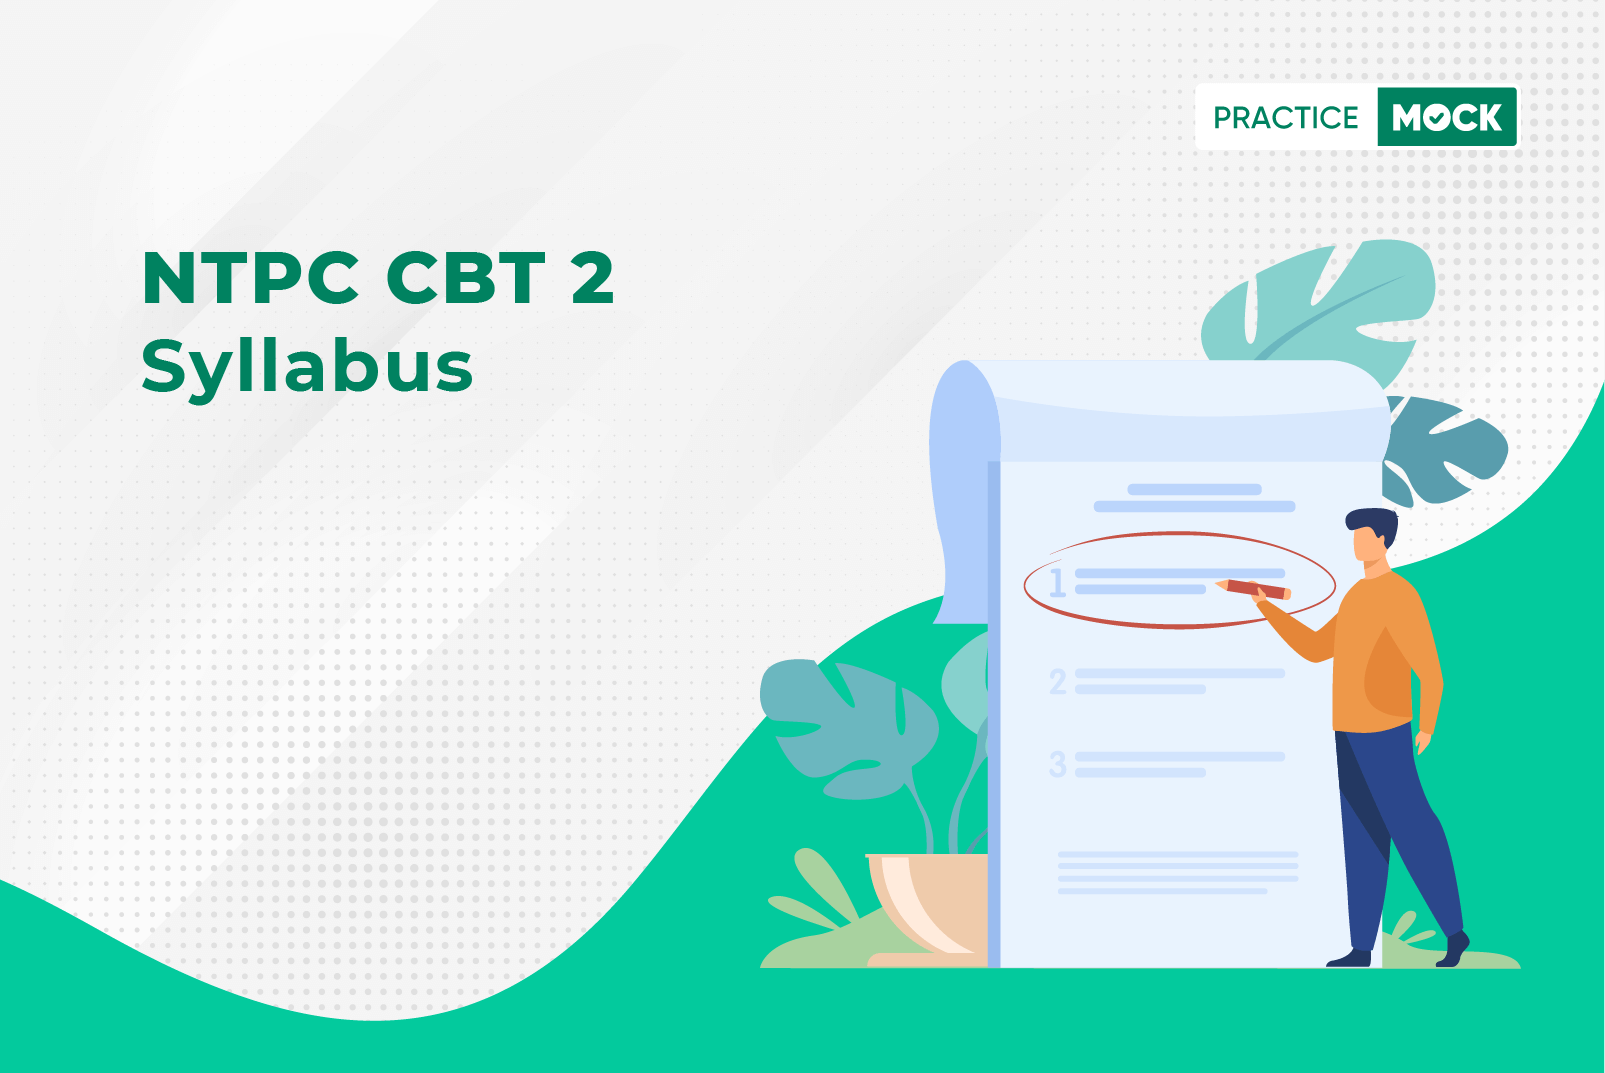 RRB NTPC CBT 2 Syllabus & Exam Pattern